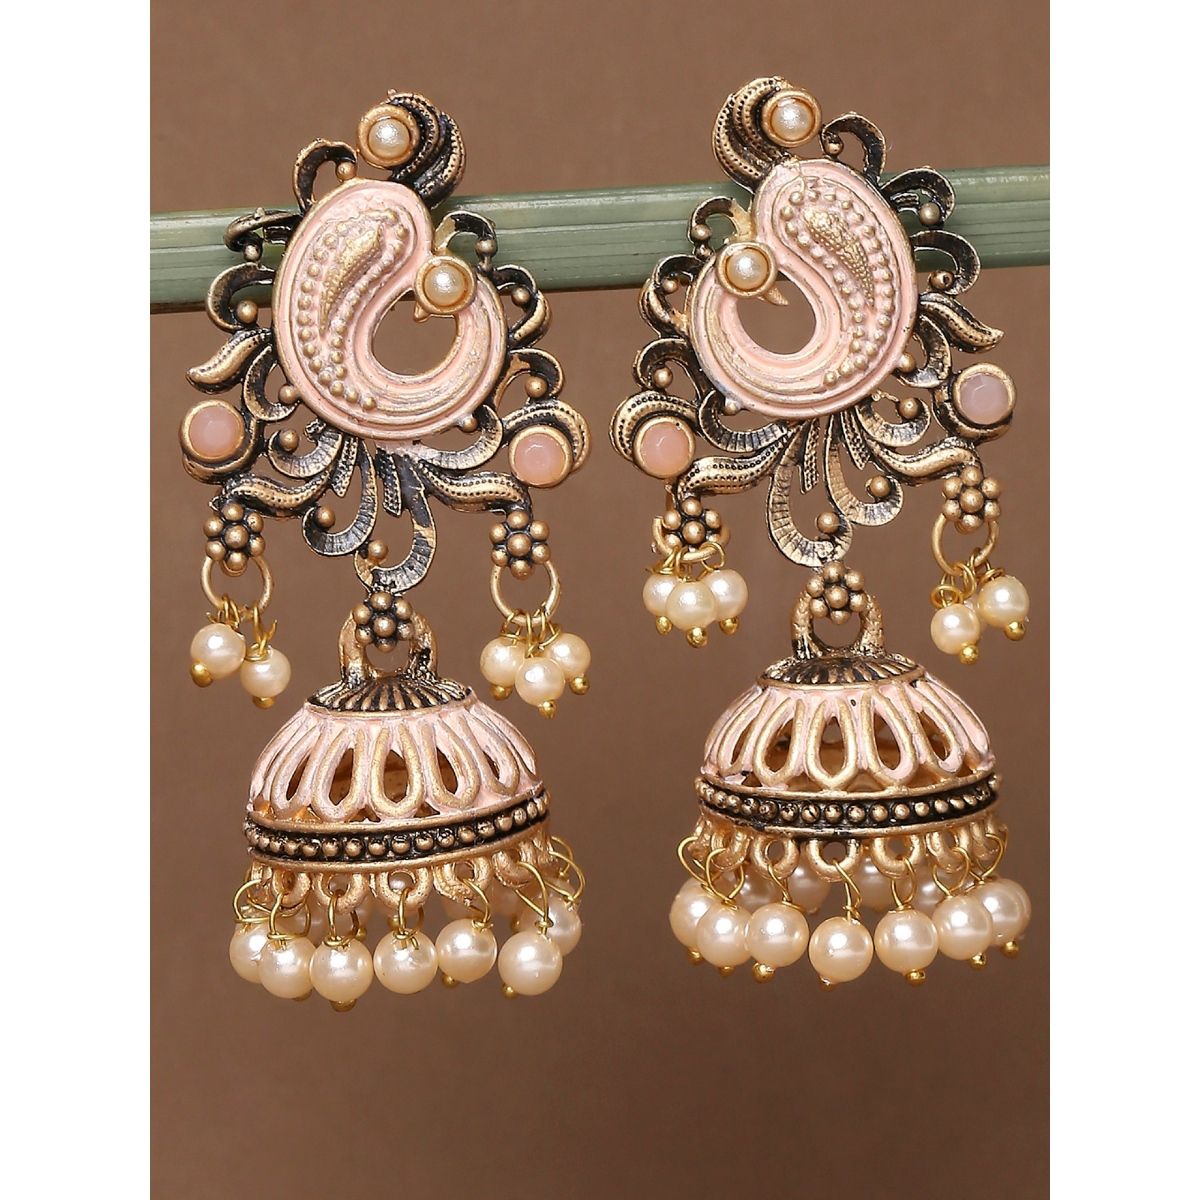 Flipkartcom  Buy Shining Diva Latest Design Stylish Traditional Party  Wear Pearl Jhumki Earrings Pearl Metal Jhumki Earring Online at Best Prices  in India